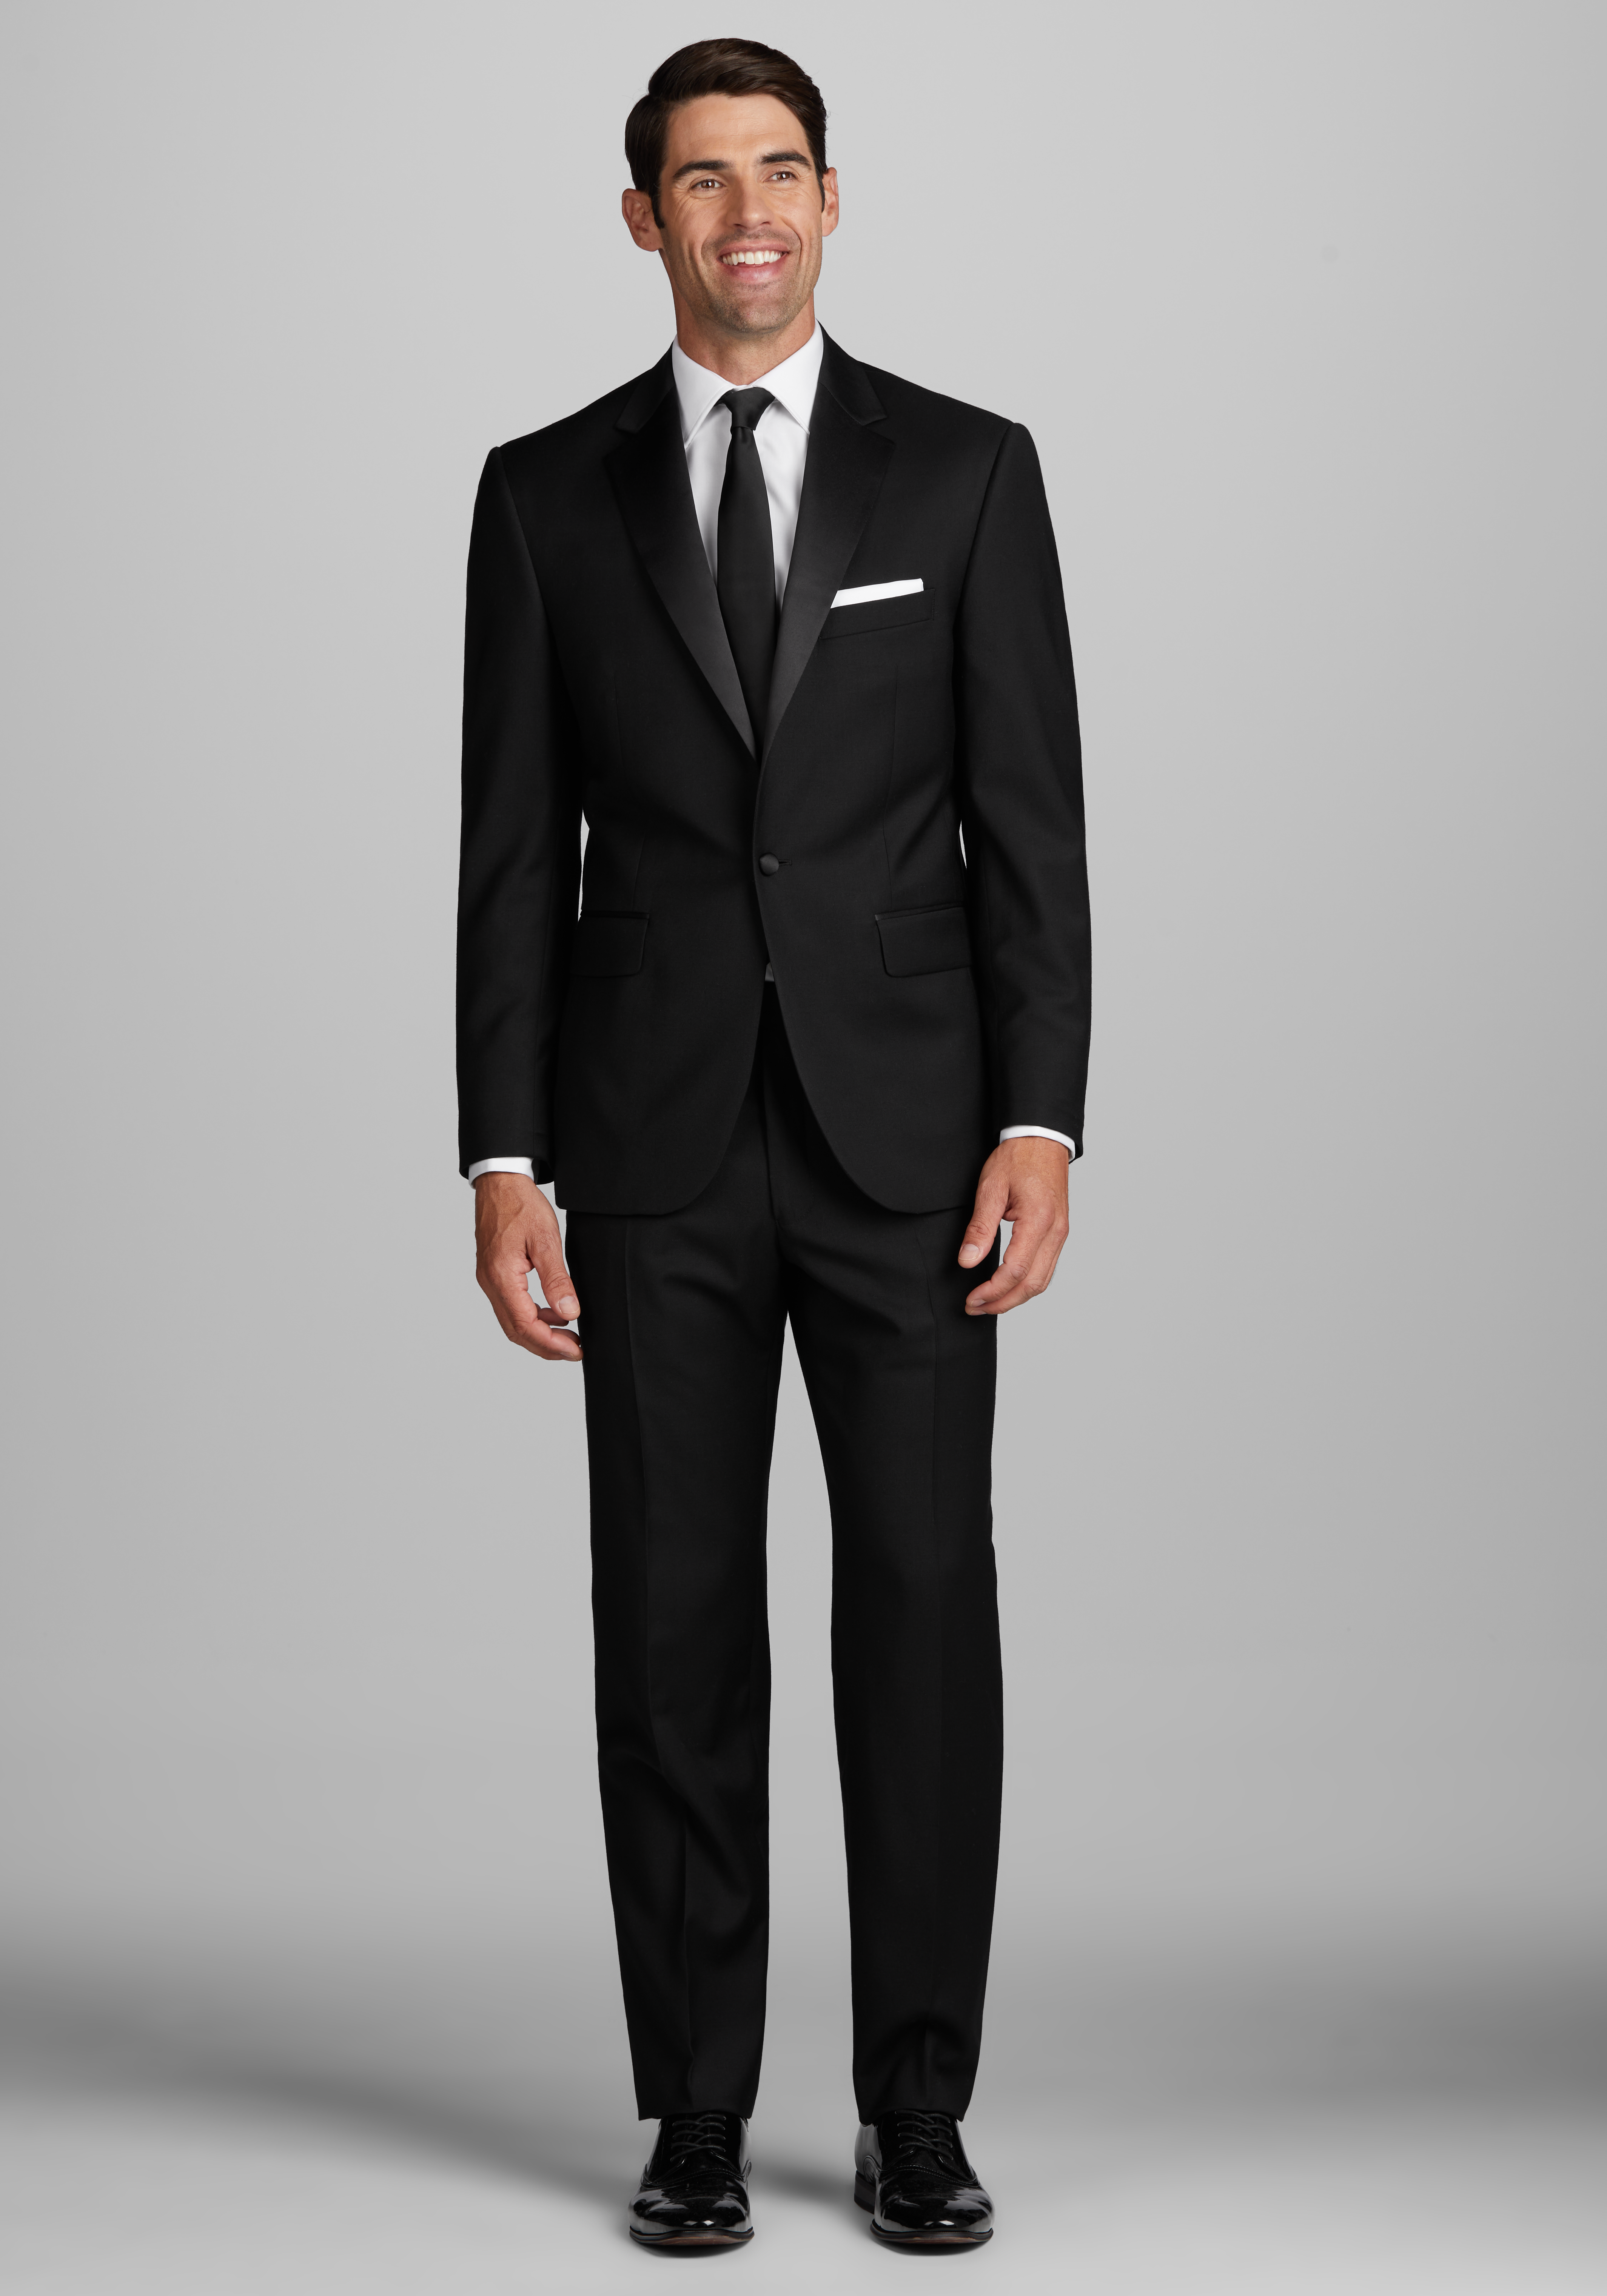 Buy online Black Solid Tuxedo Formal Blazer from Blazers for Men